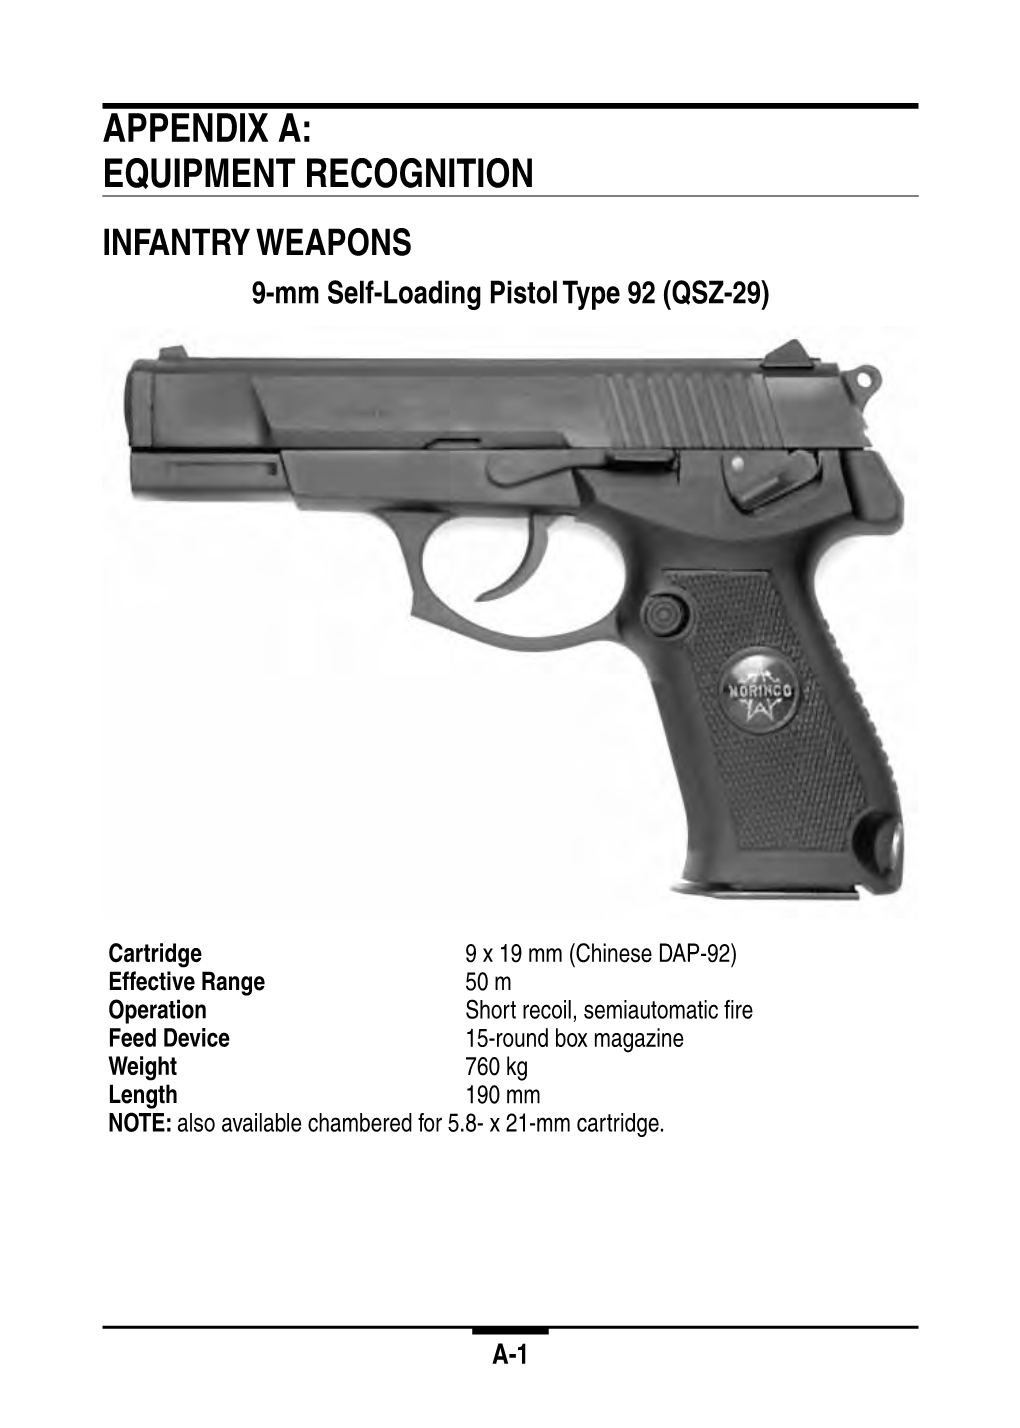 APPENDIX A: Equipment Recognition INFANTRY WEAPONS 9-Mm Self-Loading Pistol Type 92 (QSZ-29)